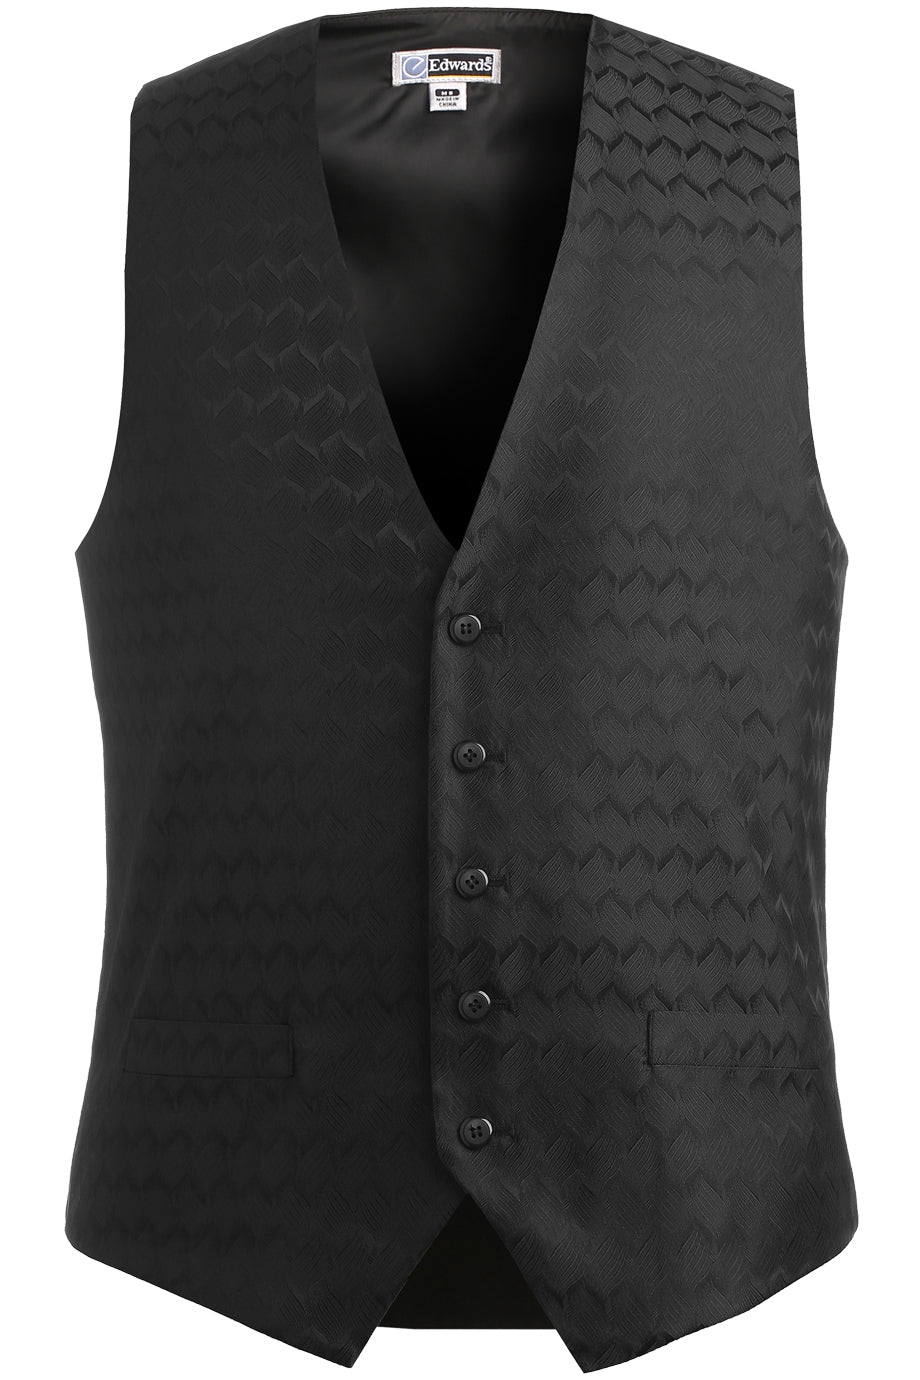 Edwards S Men's Black Swirl Brocade Vest